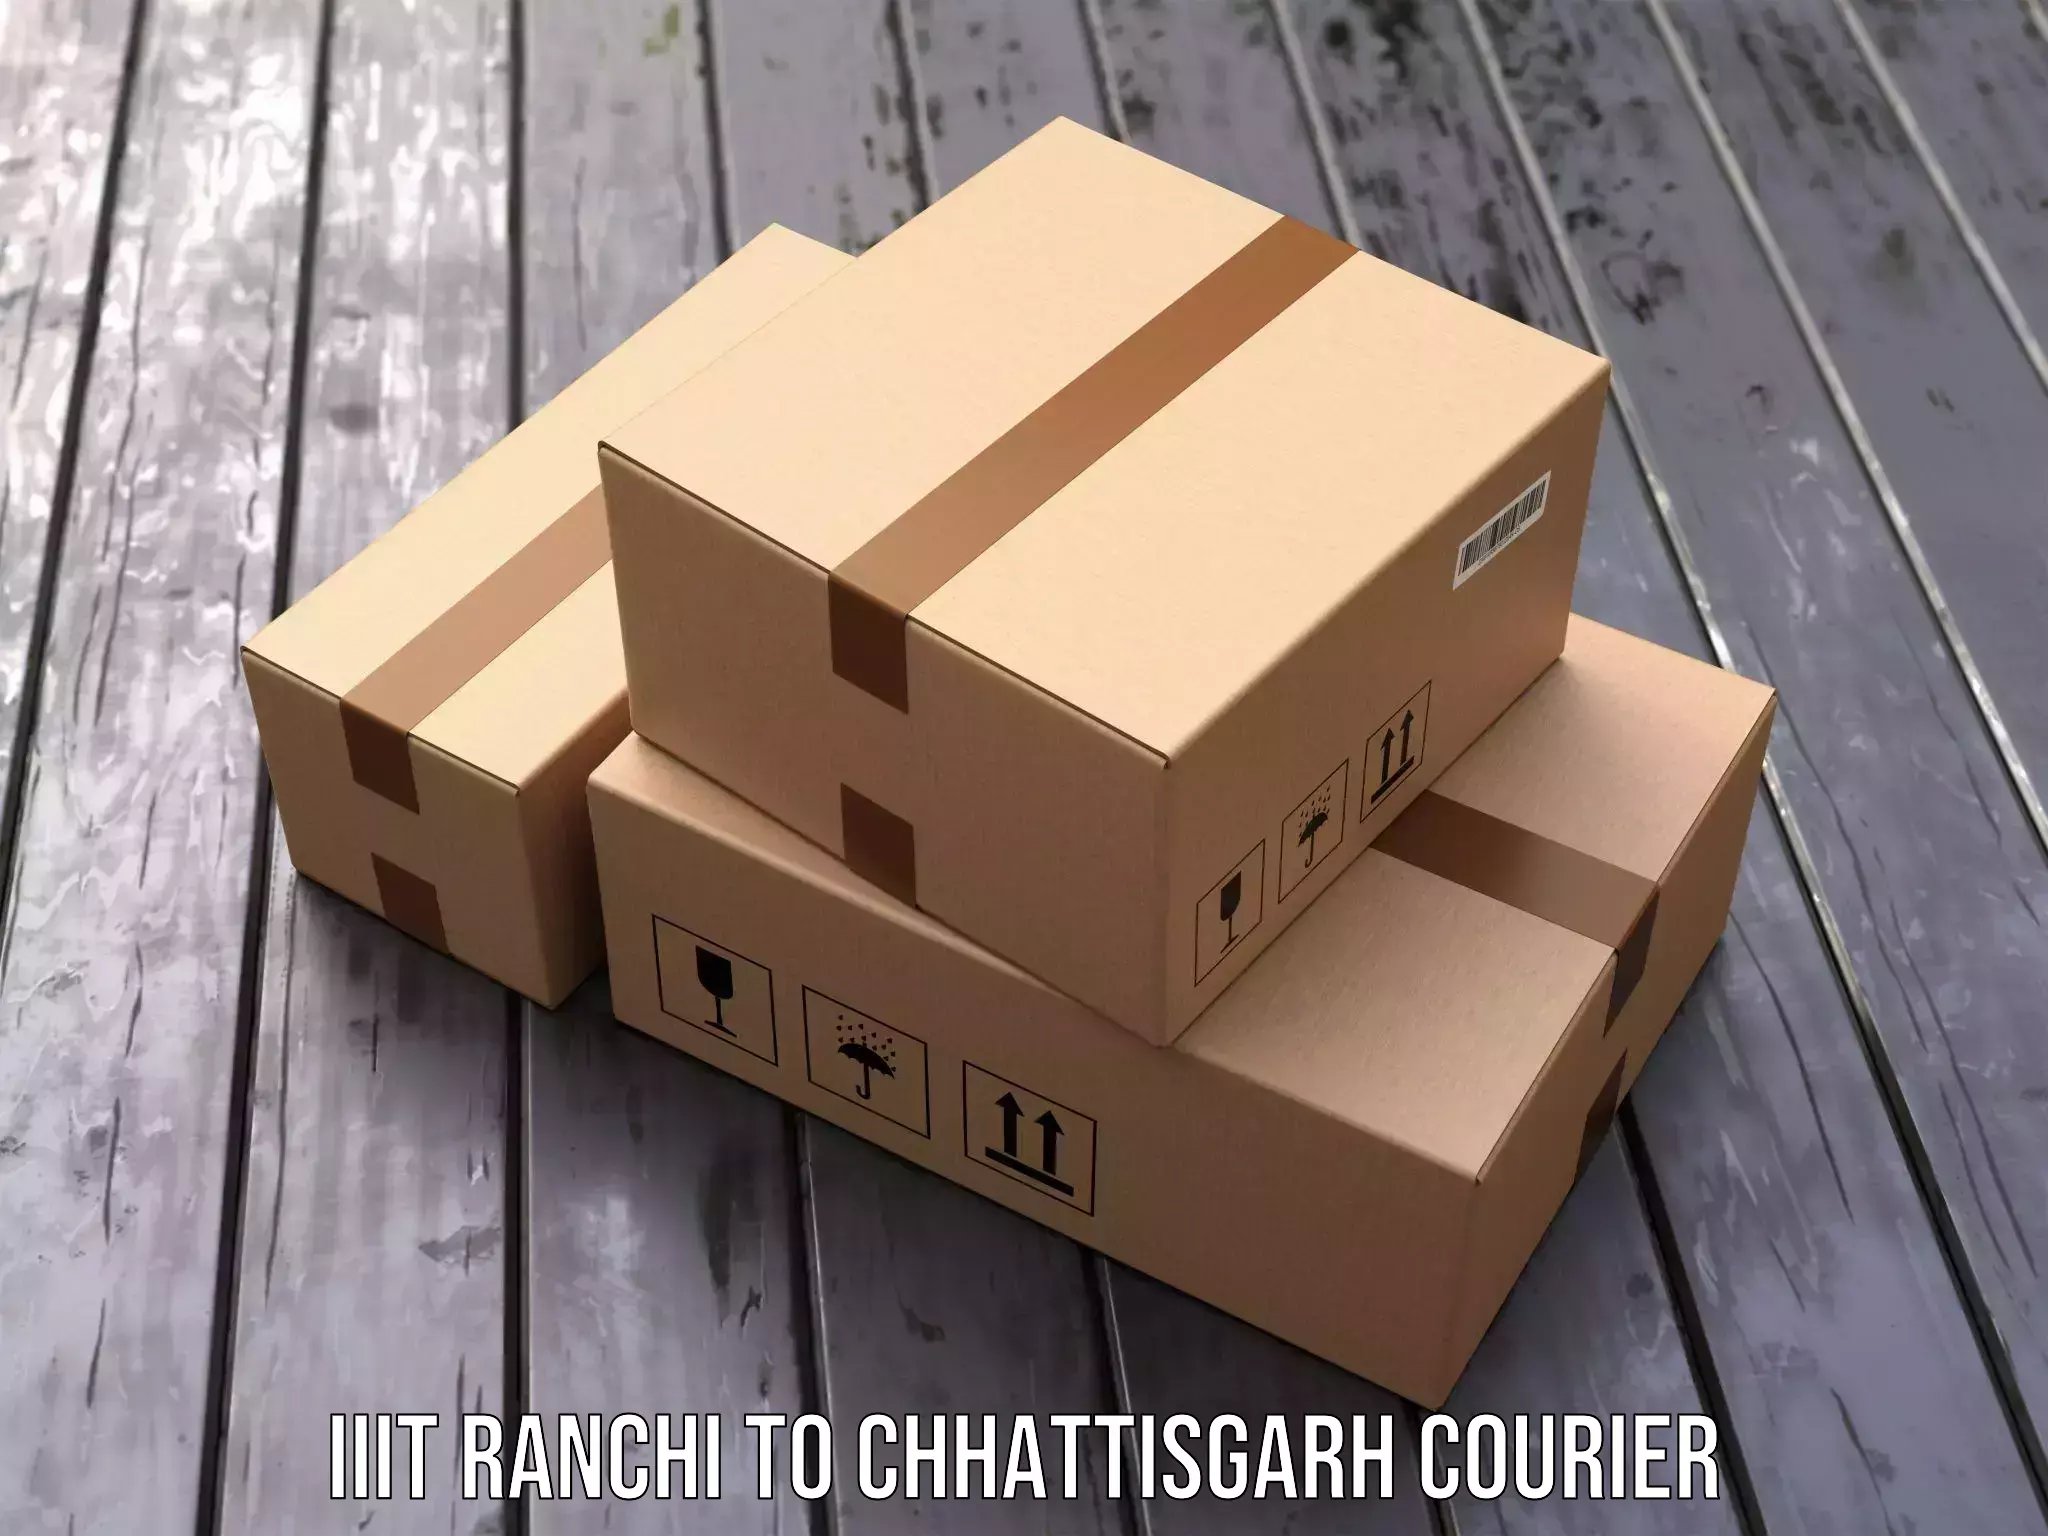 Courier service partnerships in IIIT Ranchi to Berla